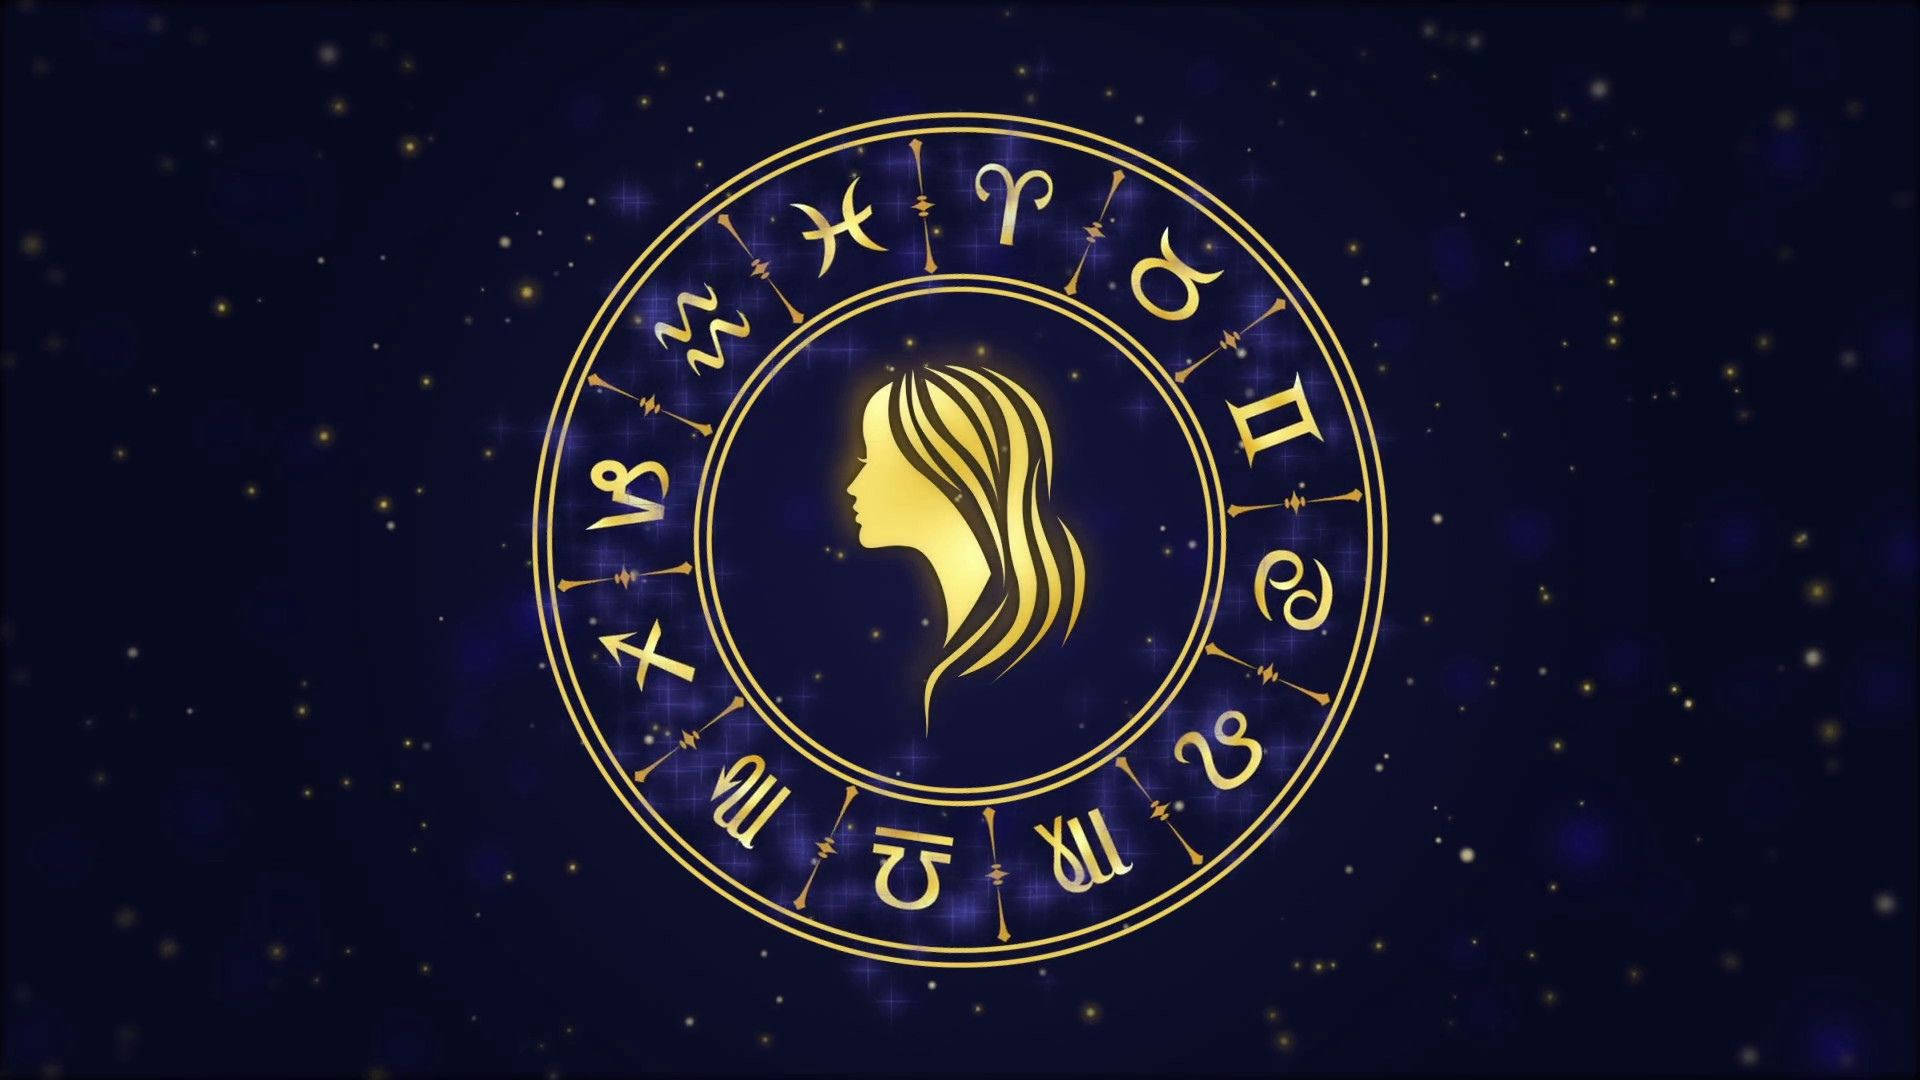 Virgo Zodiac Lady And Chart Background